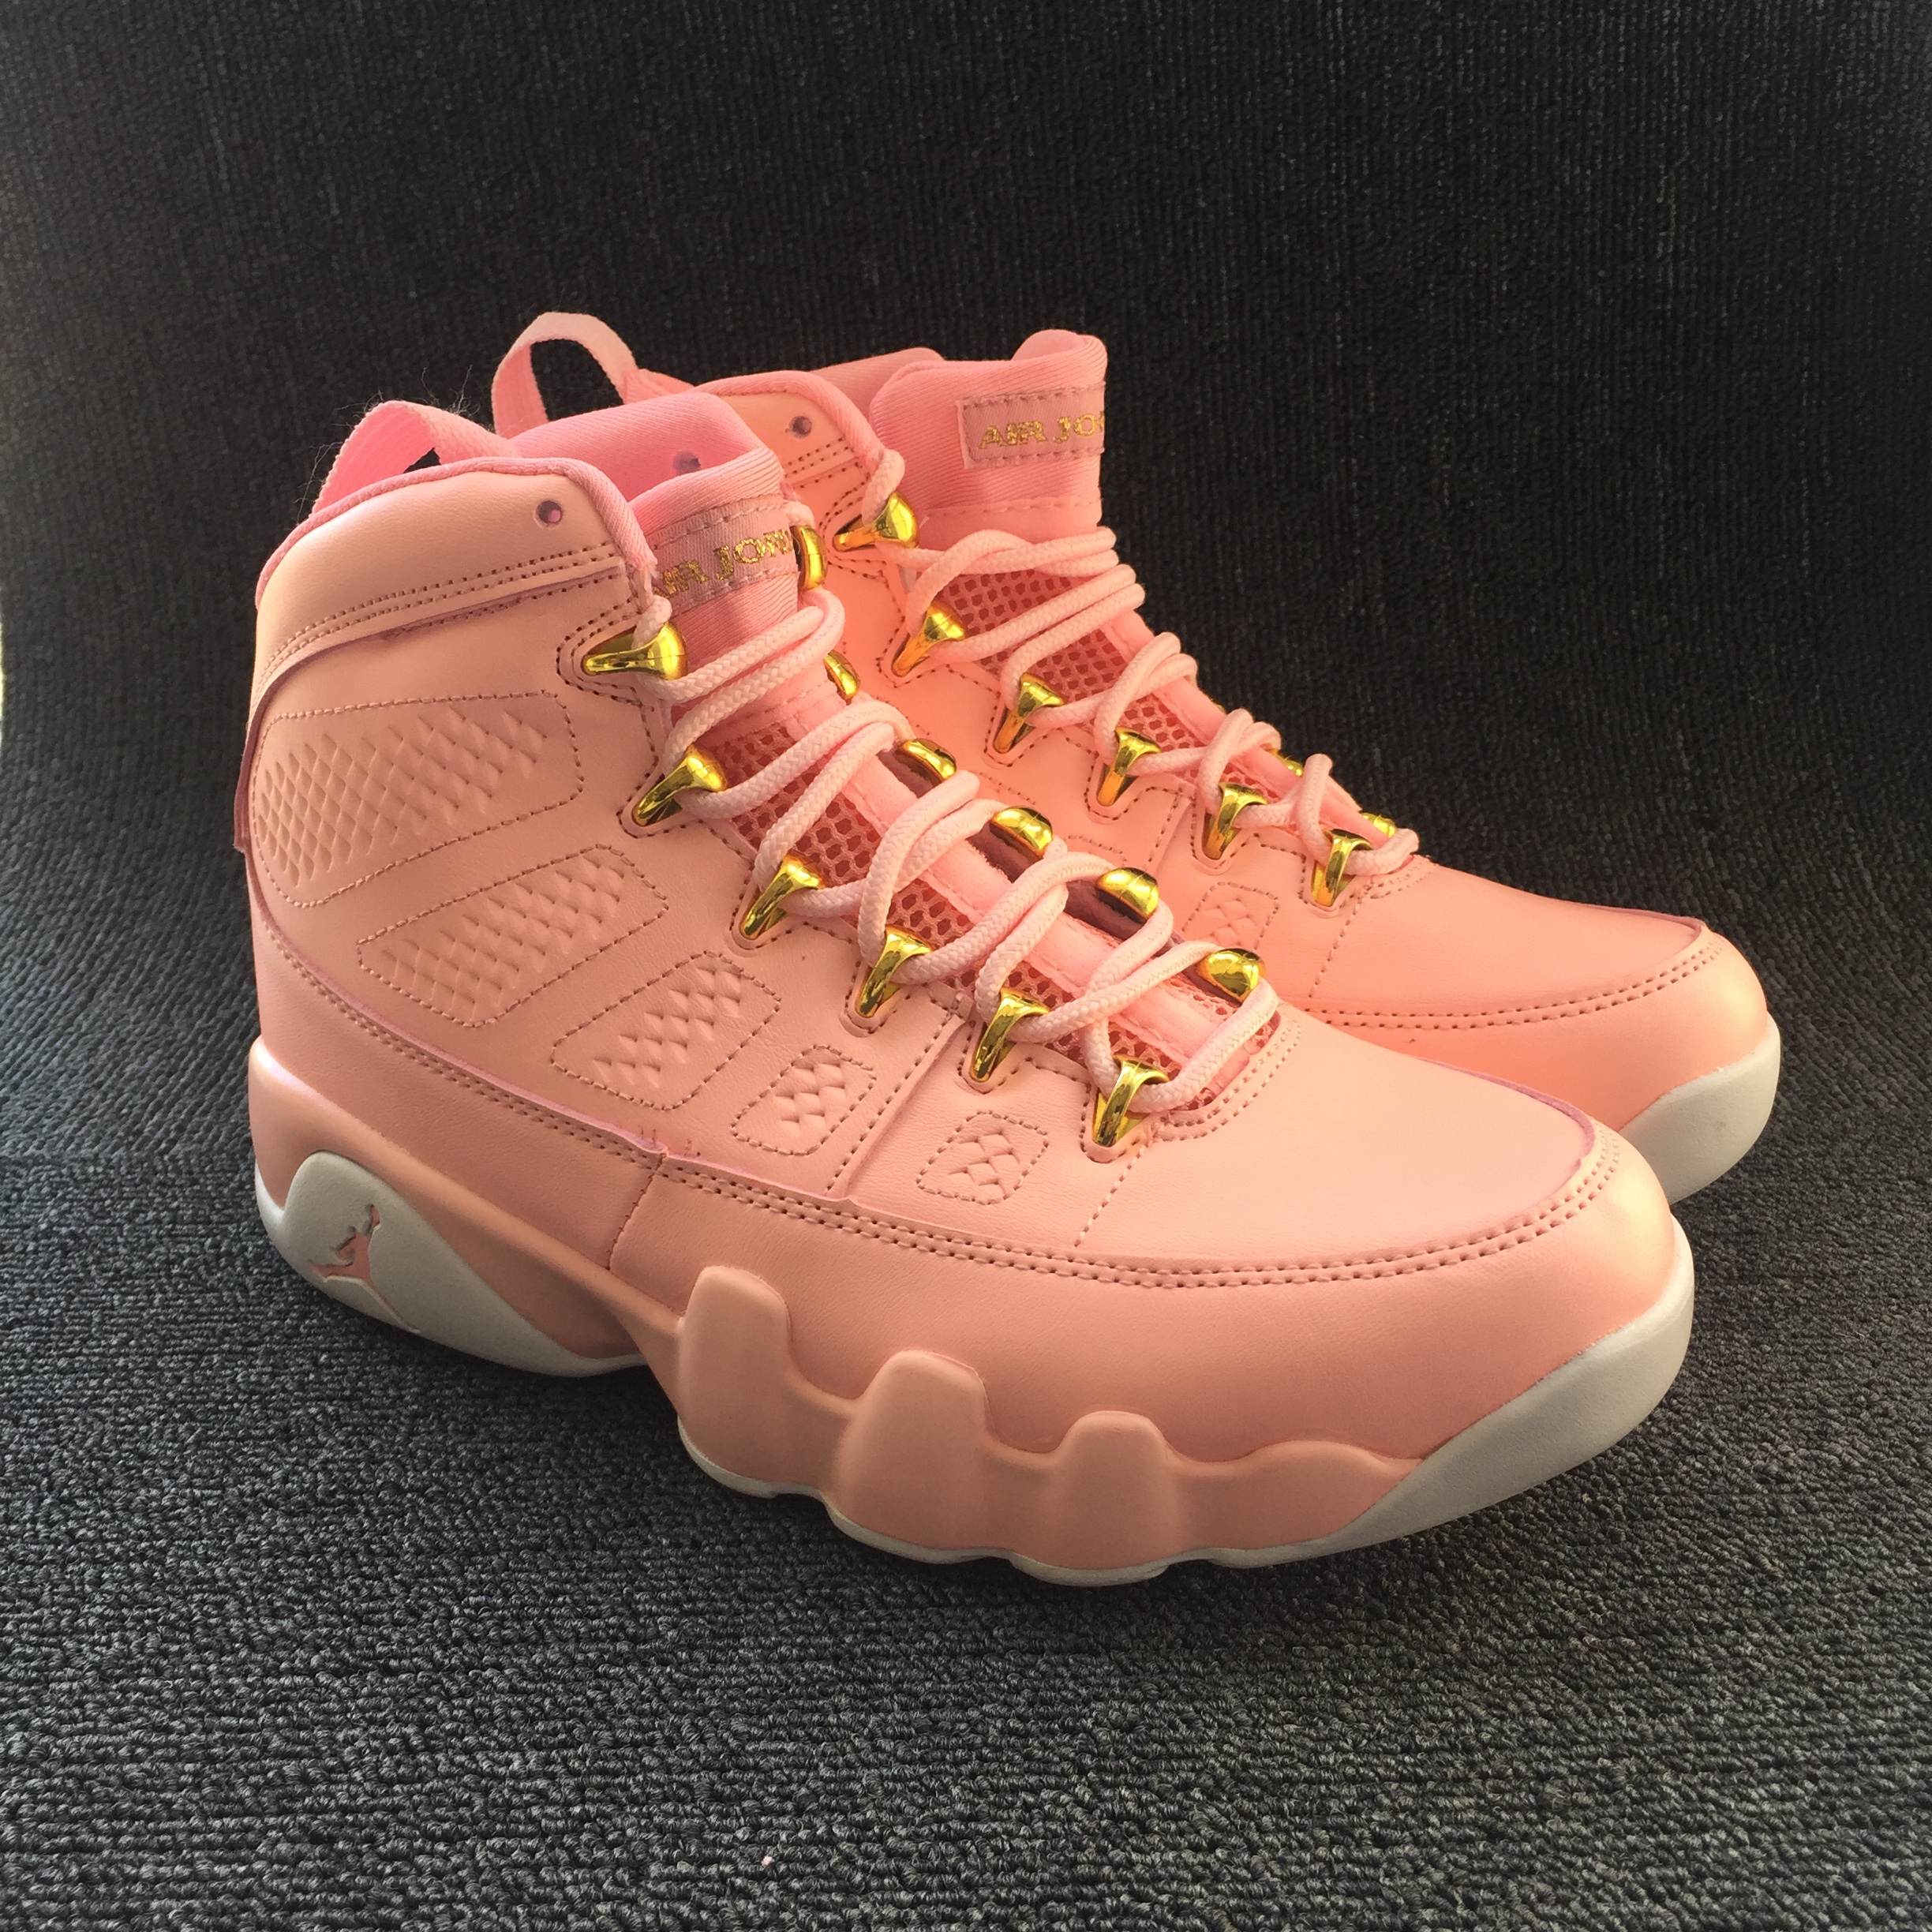 New Air Jordan 9 Pink White Shoes Women